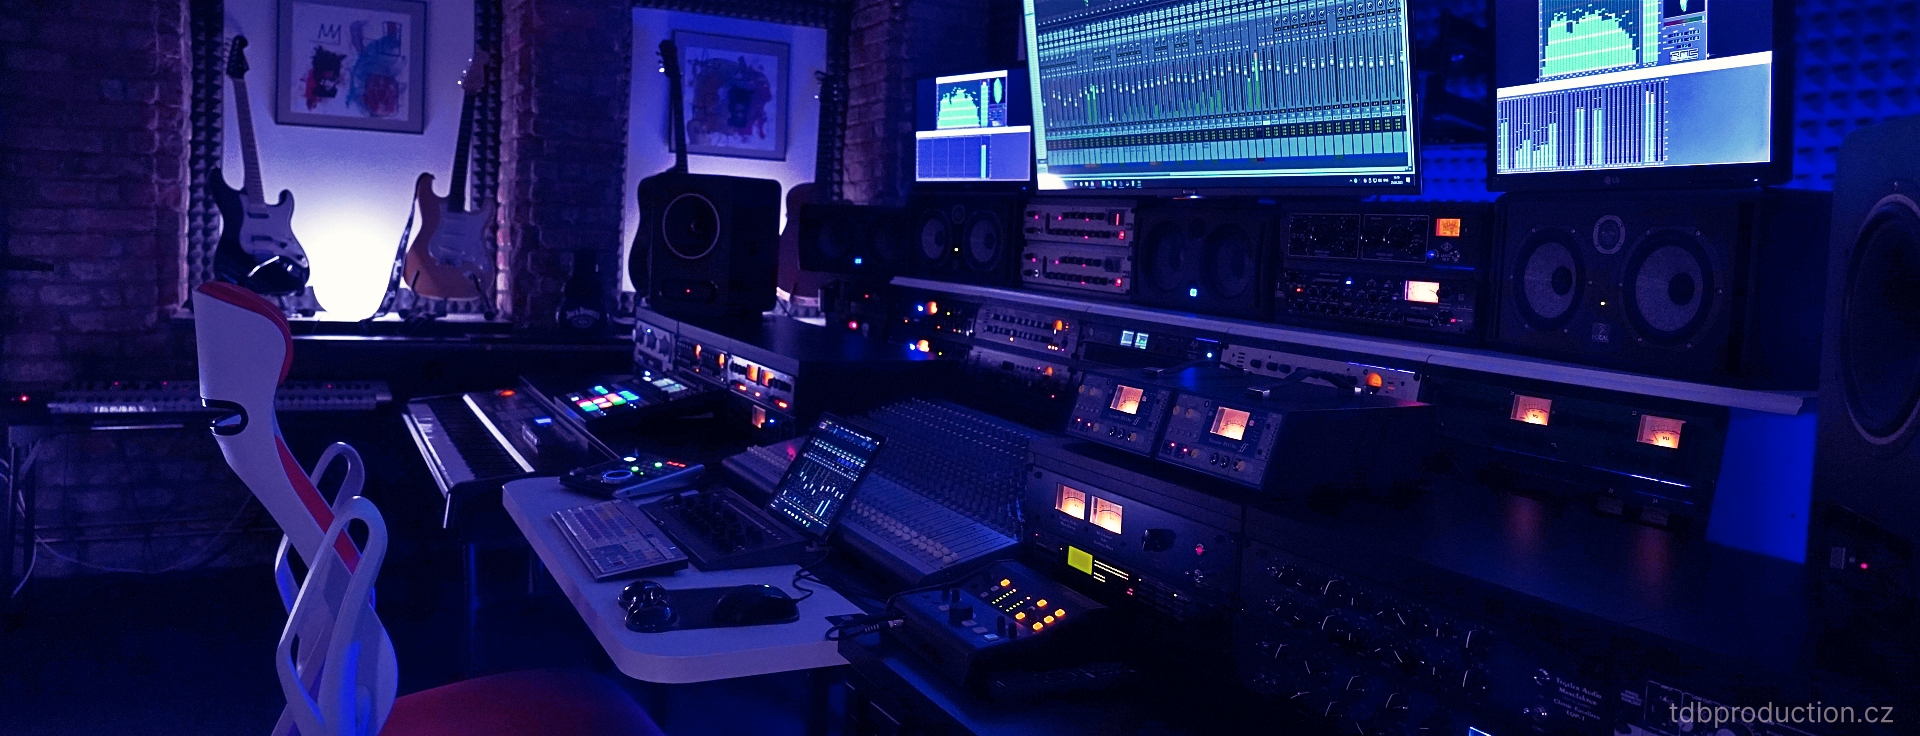 TdB Production - Nahrávací studio a videoprodukce Praha - VOICEOVER